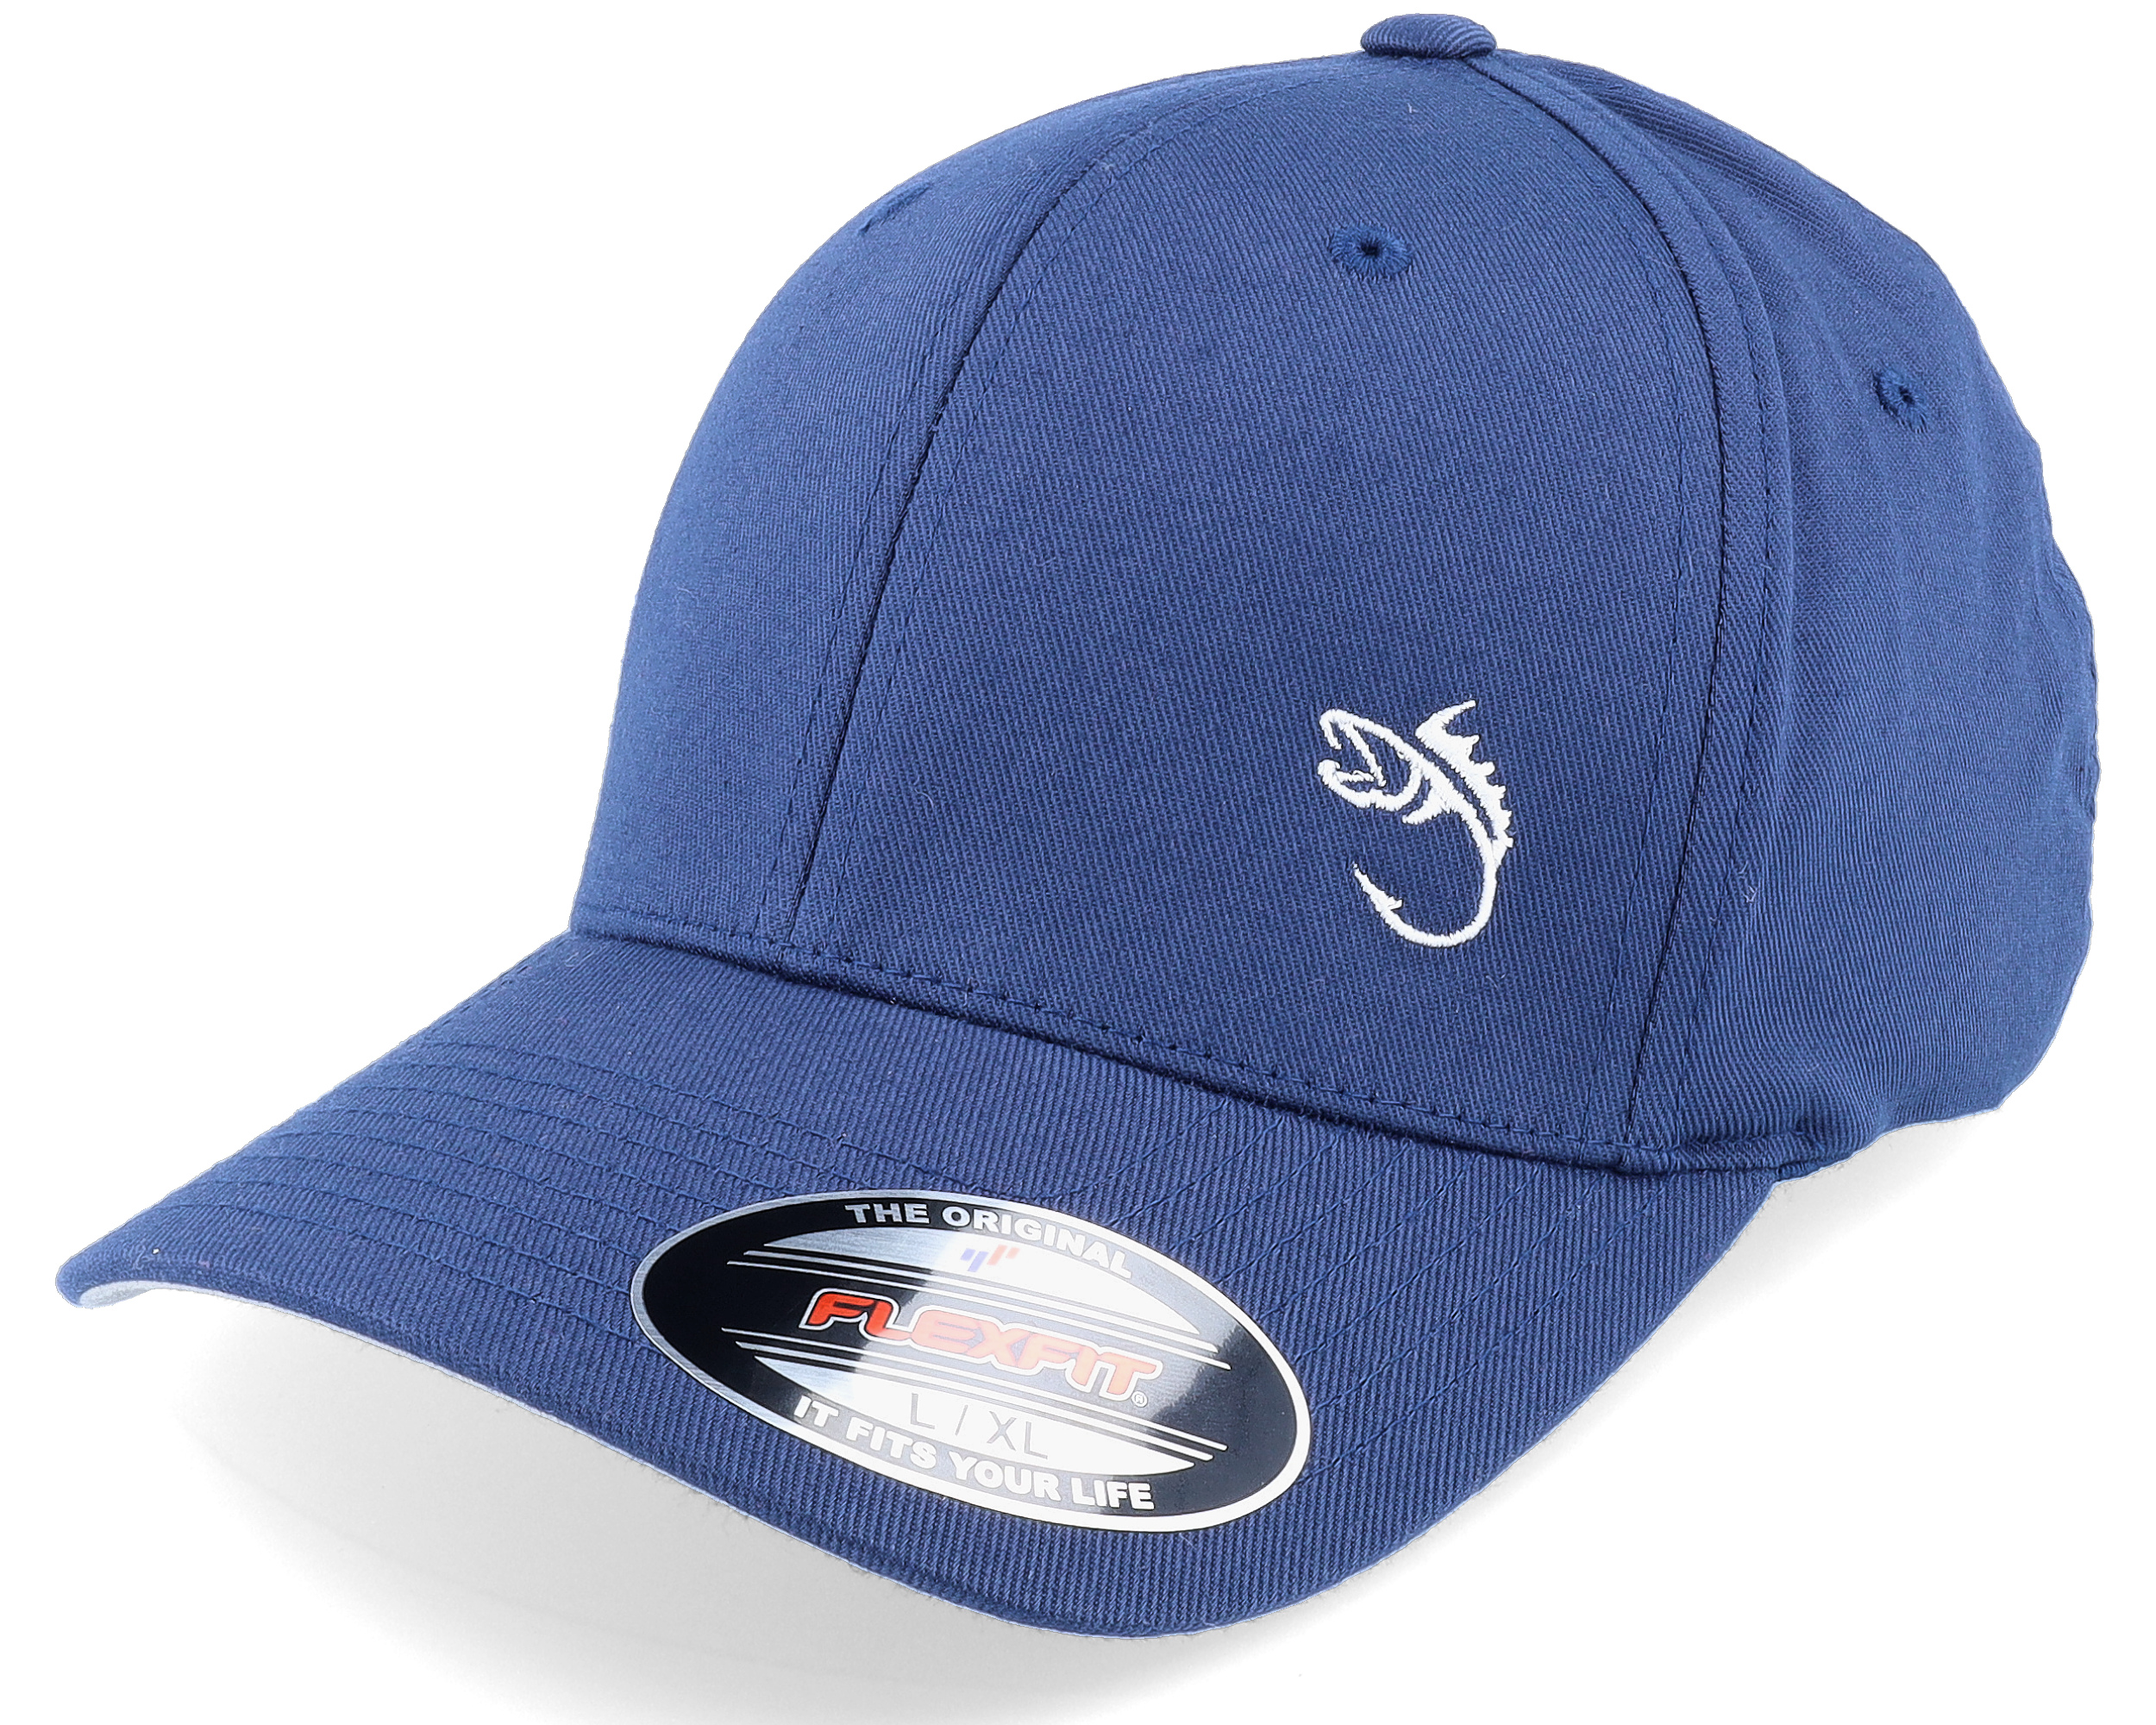 Skillfish - Blue Flexfit Cap - White Fish Hook Logo Navy Flexfit @ Hatstore